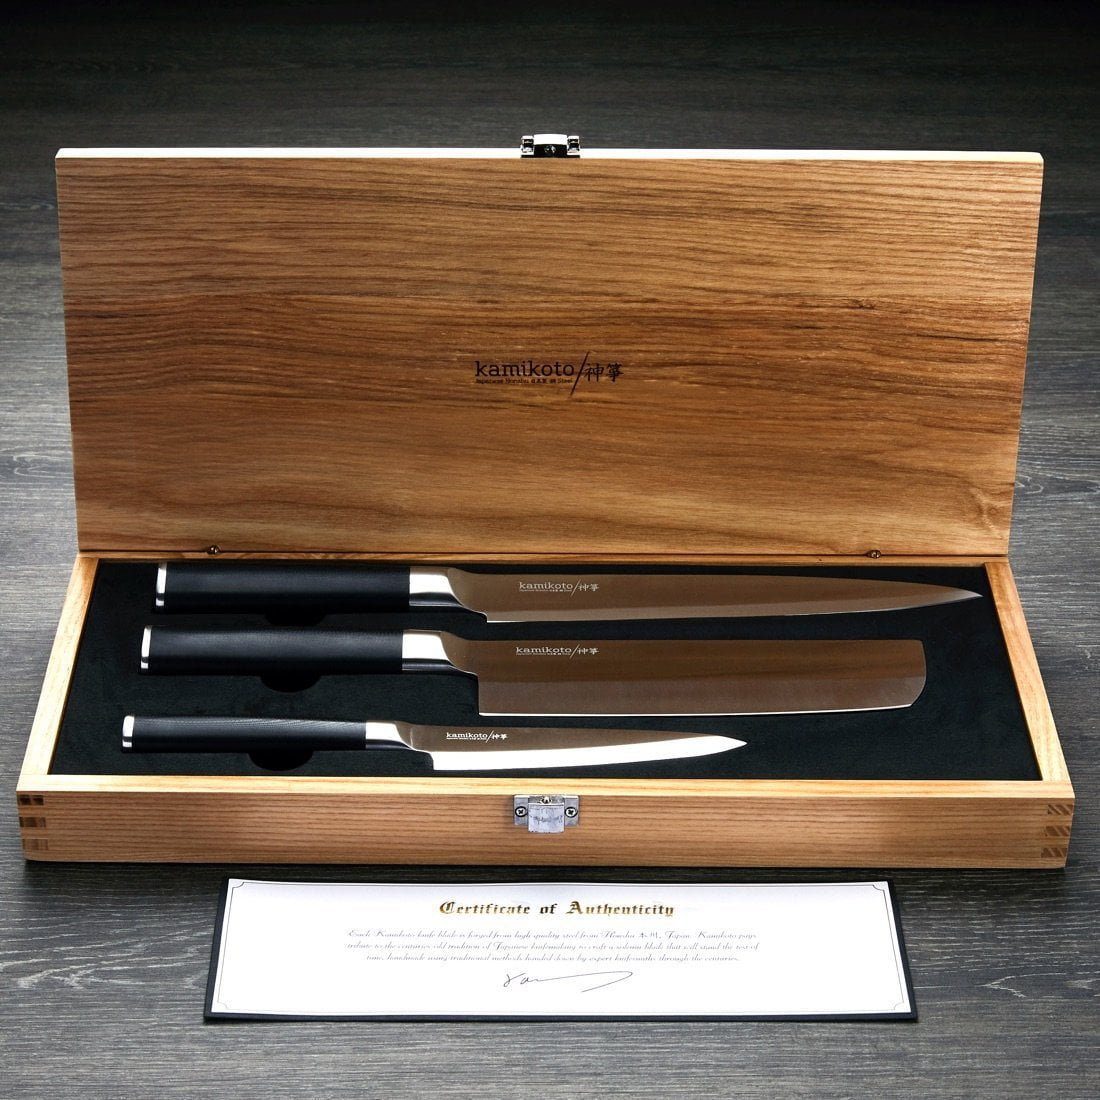 Kamikoto Kanpeki 3pc Knife Set w/Certificate of Authenticity (New